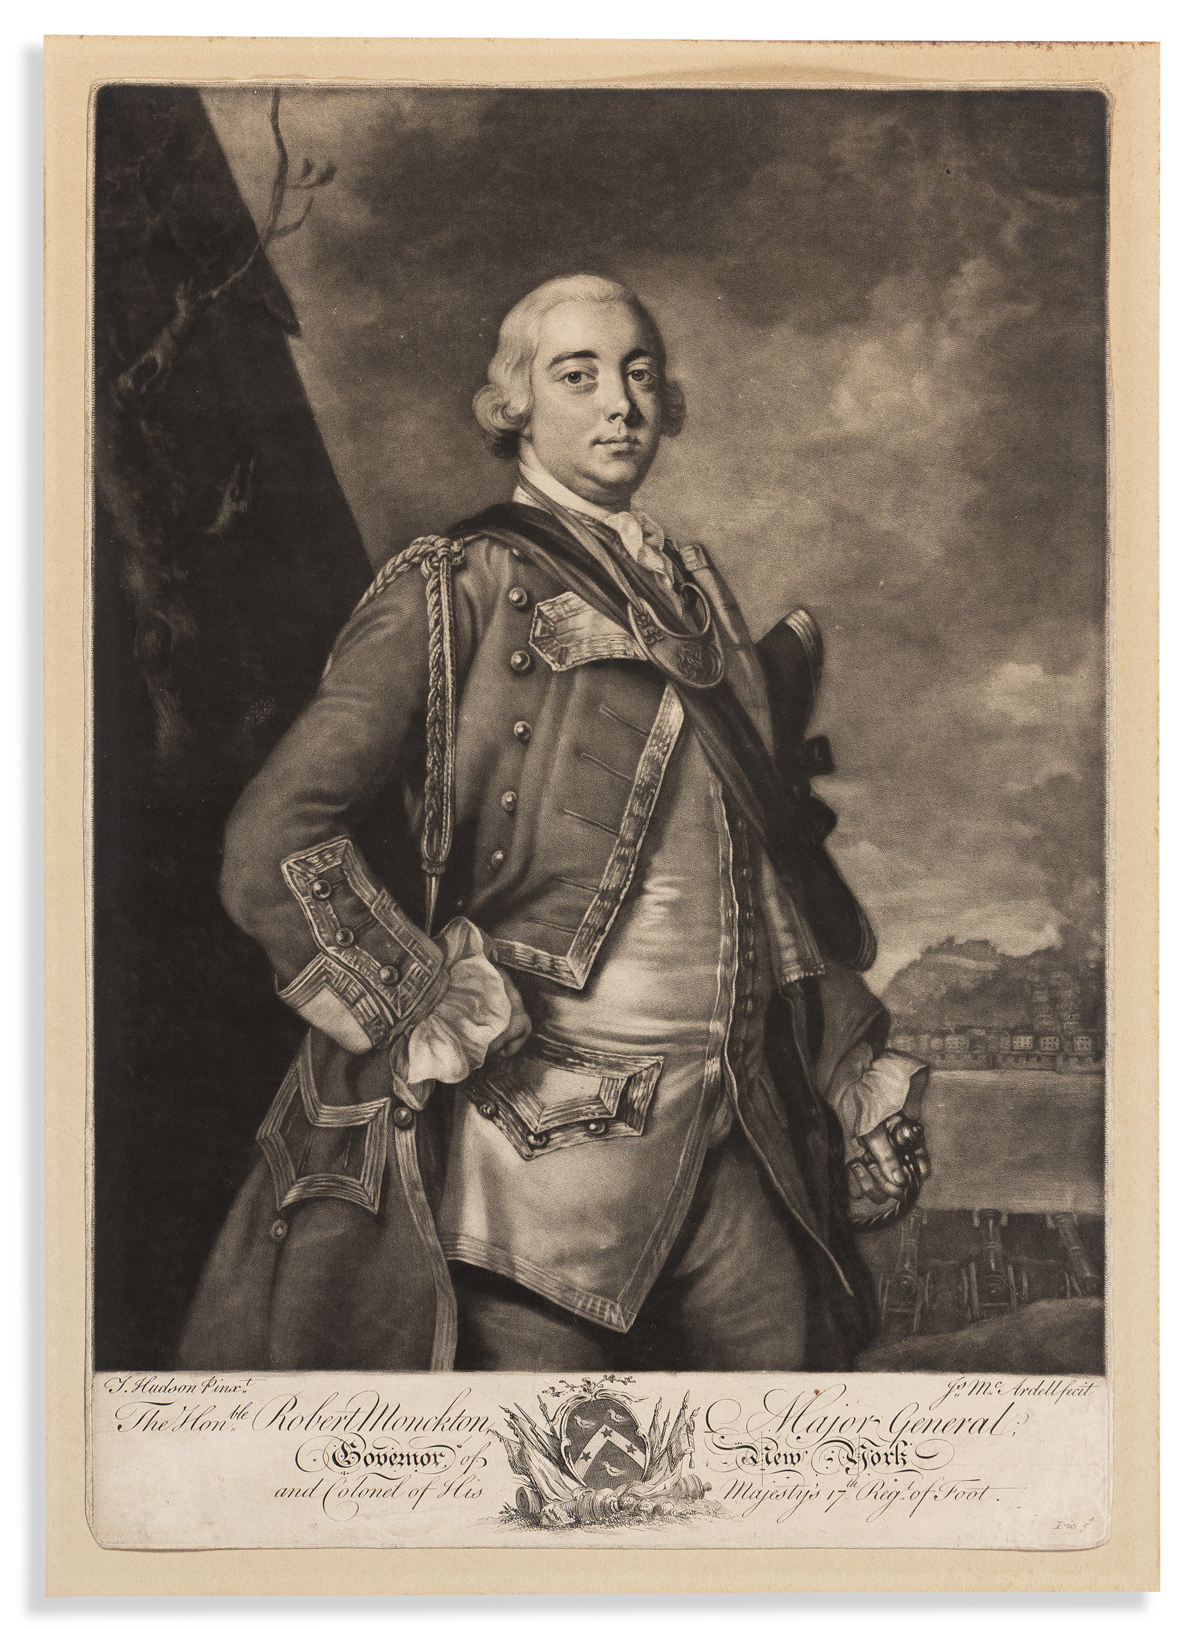 (FRENCH & INDIAN WAR.) James McArdell, engraver; after Hudson. The Honble Robert Monckton, Major General, Governor of New York.